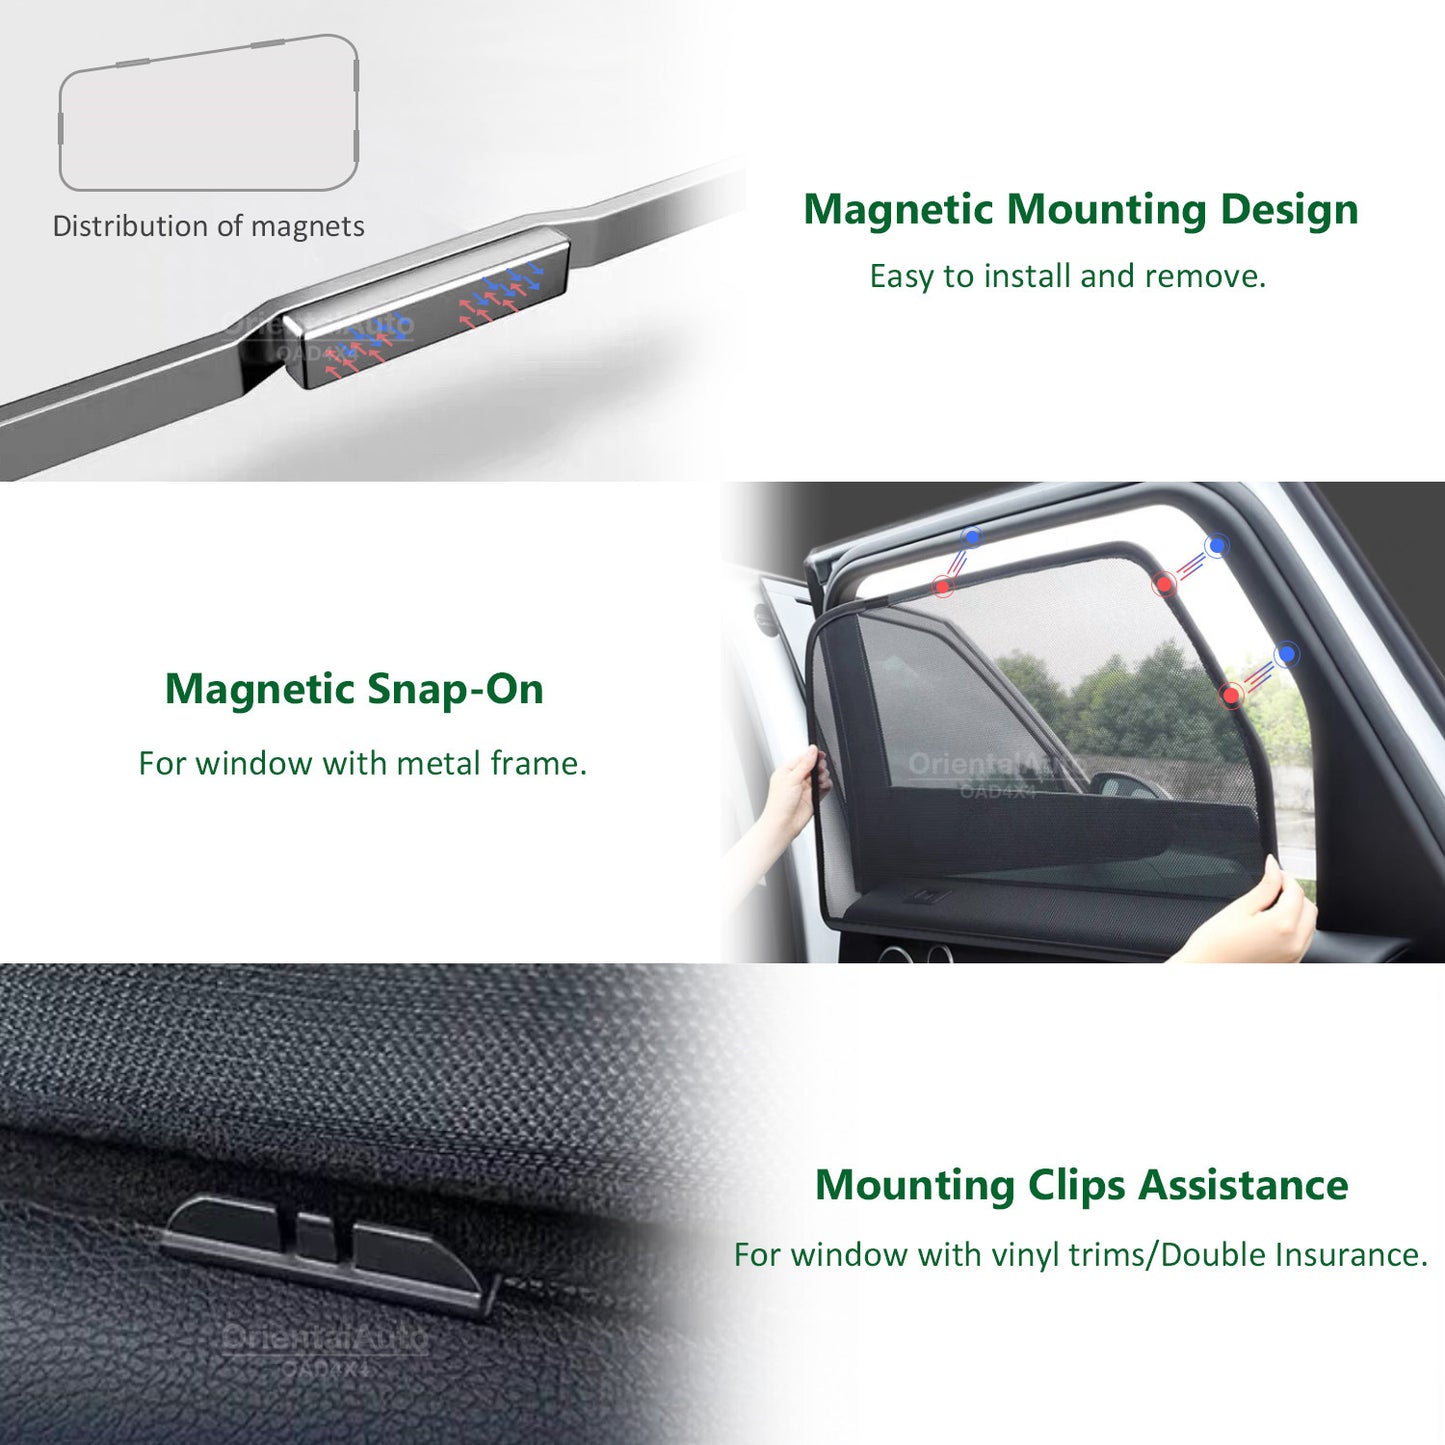 6PCS Magnetic Sun Shade for KIA Sorento XM Series 2009-2015 Window Sun Shades UV Protection Mesh Cover